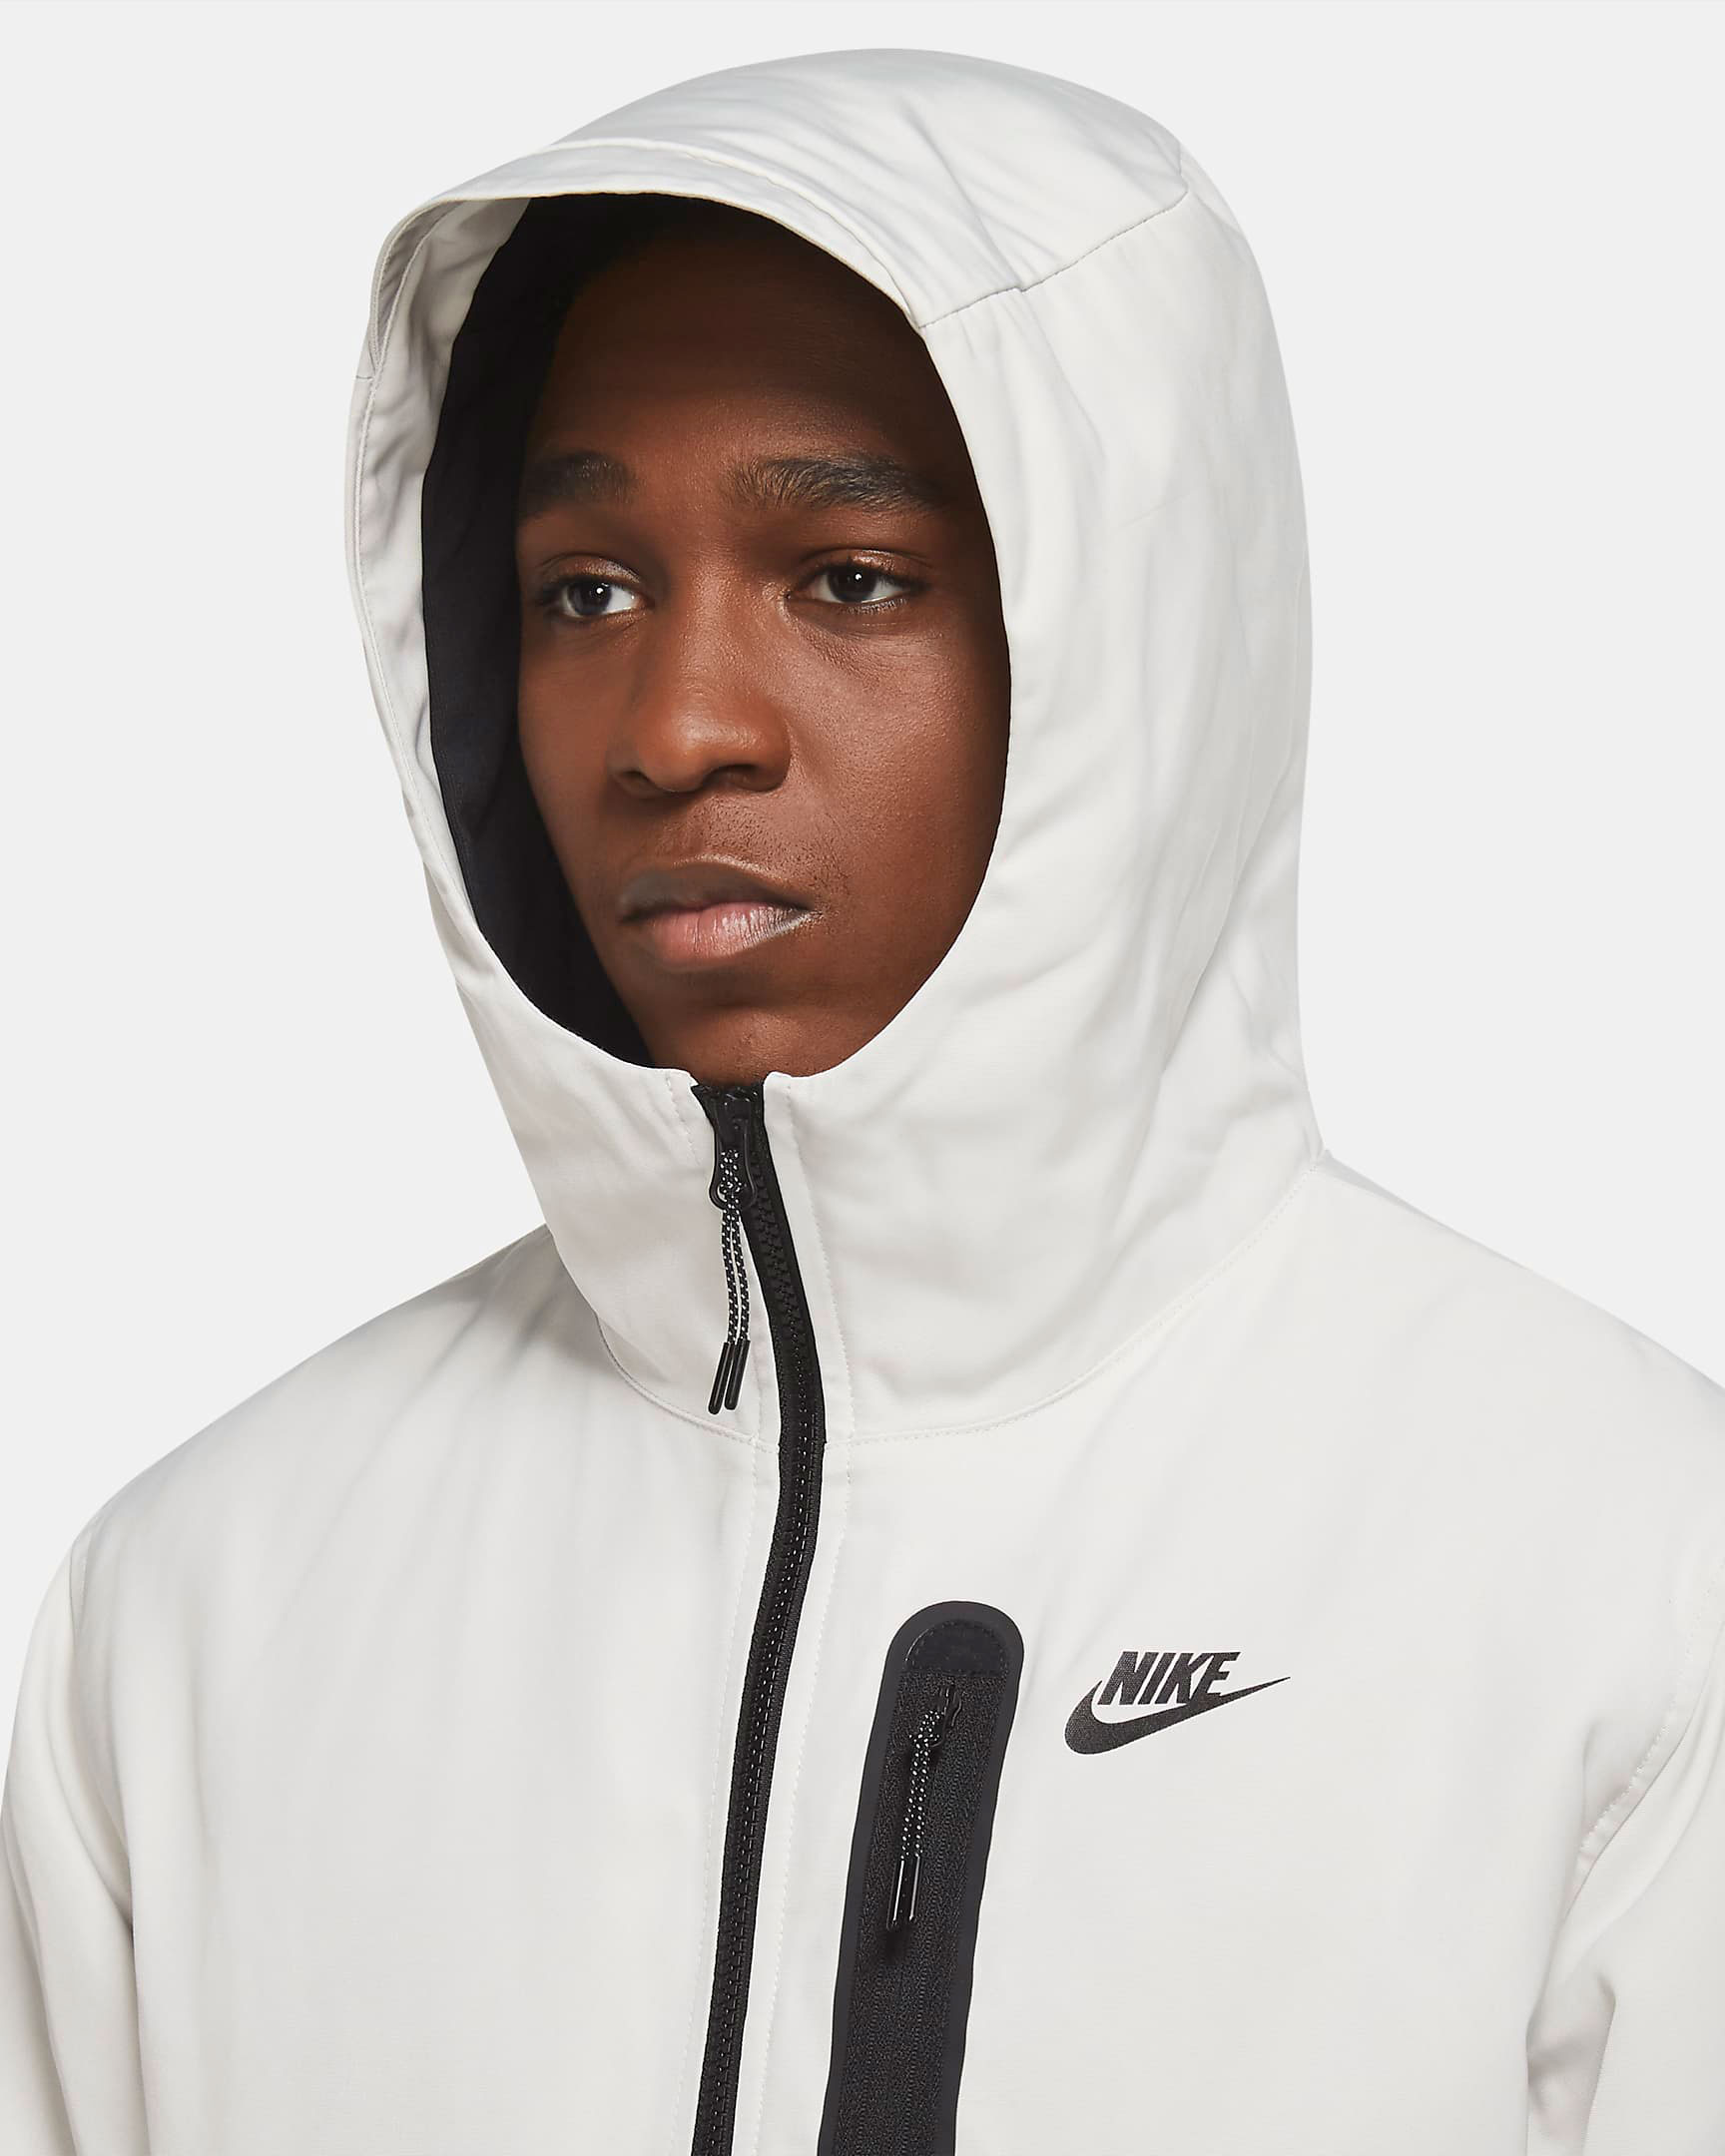 Air Jordan 1 Dark Mocha Nike Winter Jacket Outfit | SneakerFits.com